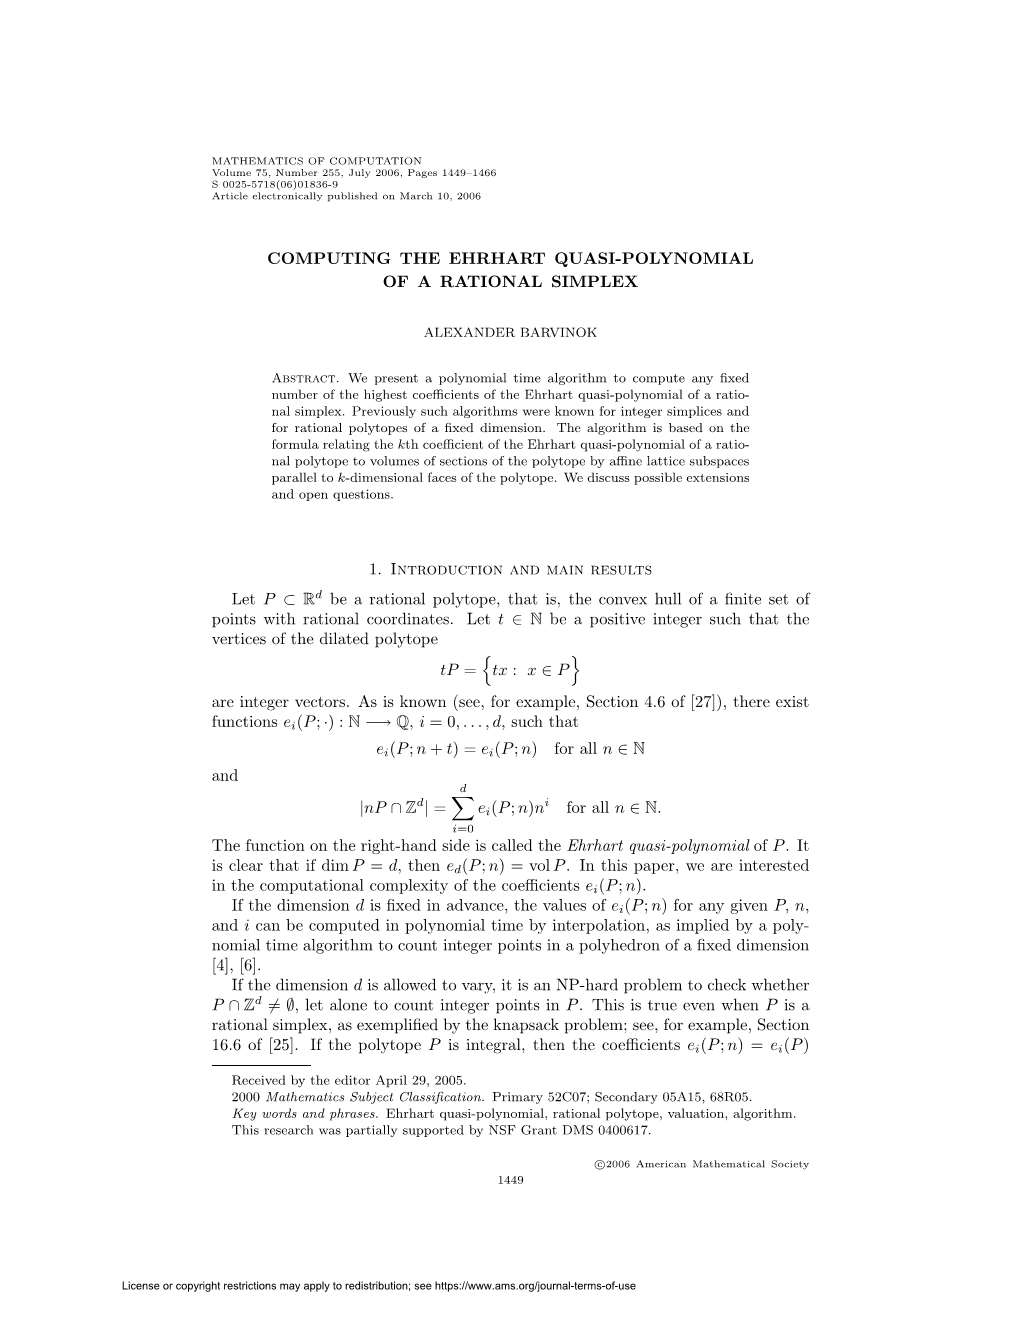 Computing the Ehrhart Quasi-Polynomial of a Rational Simplex